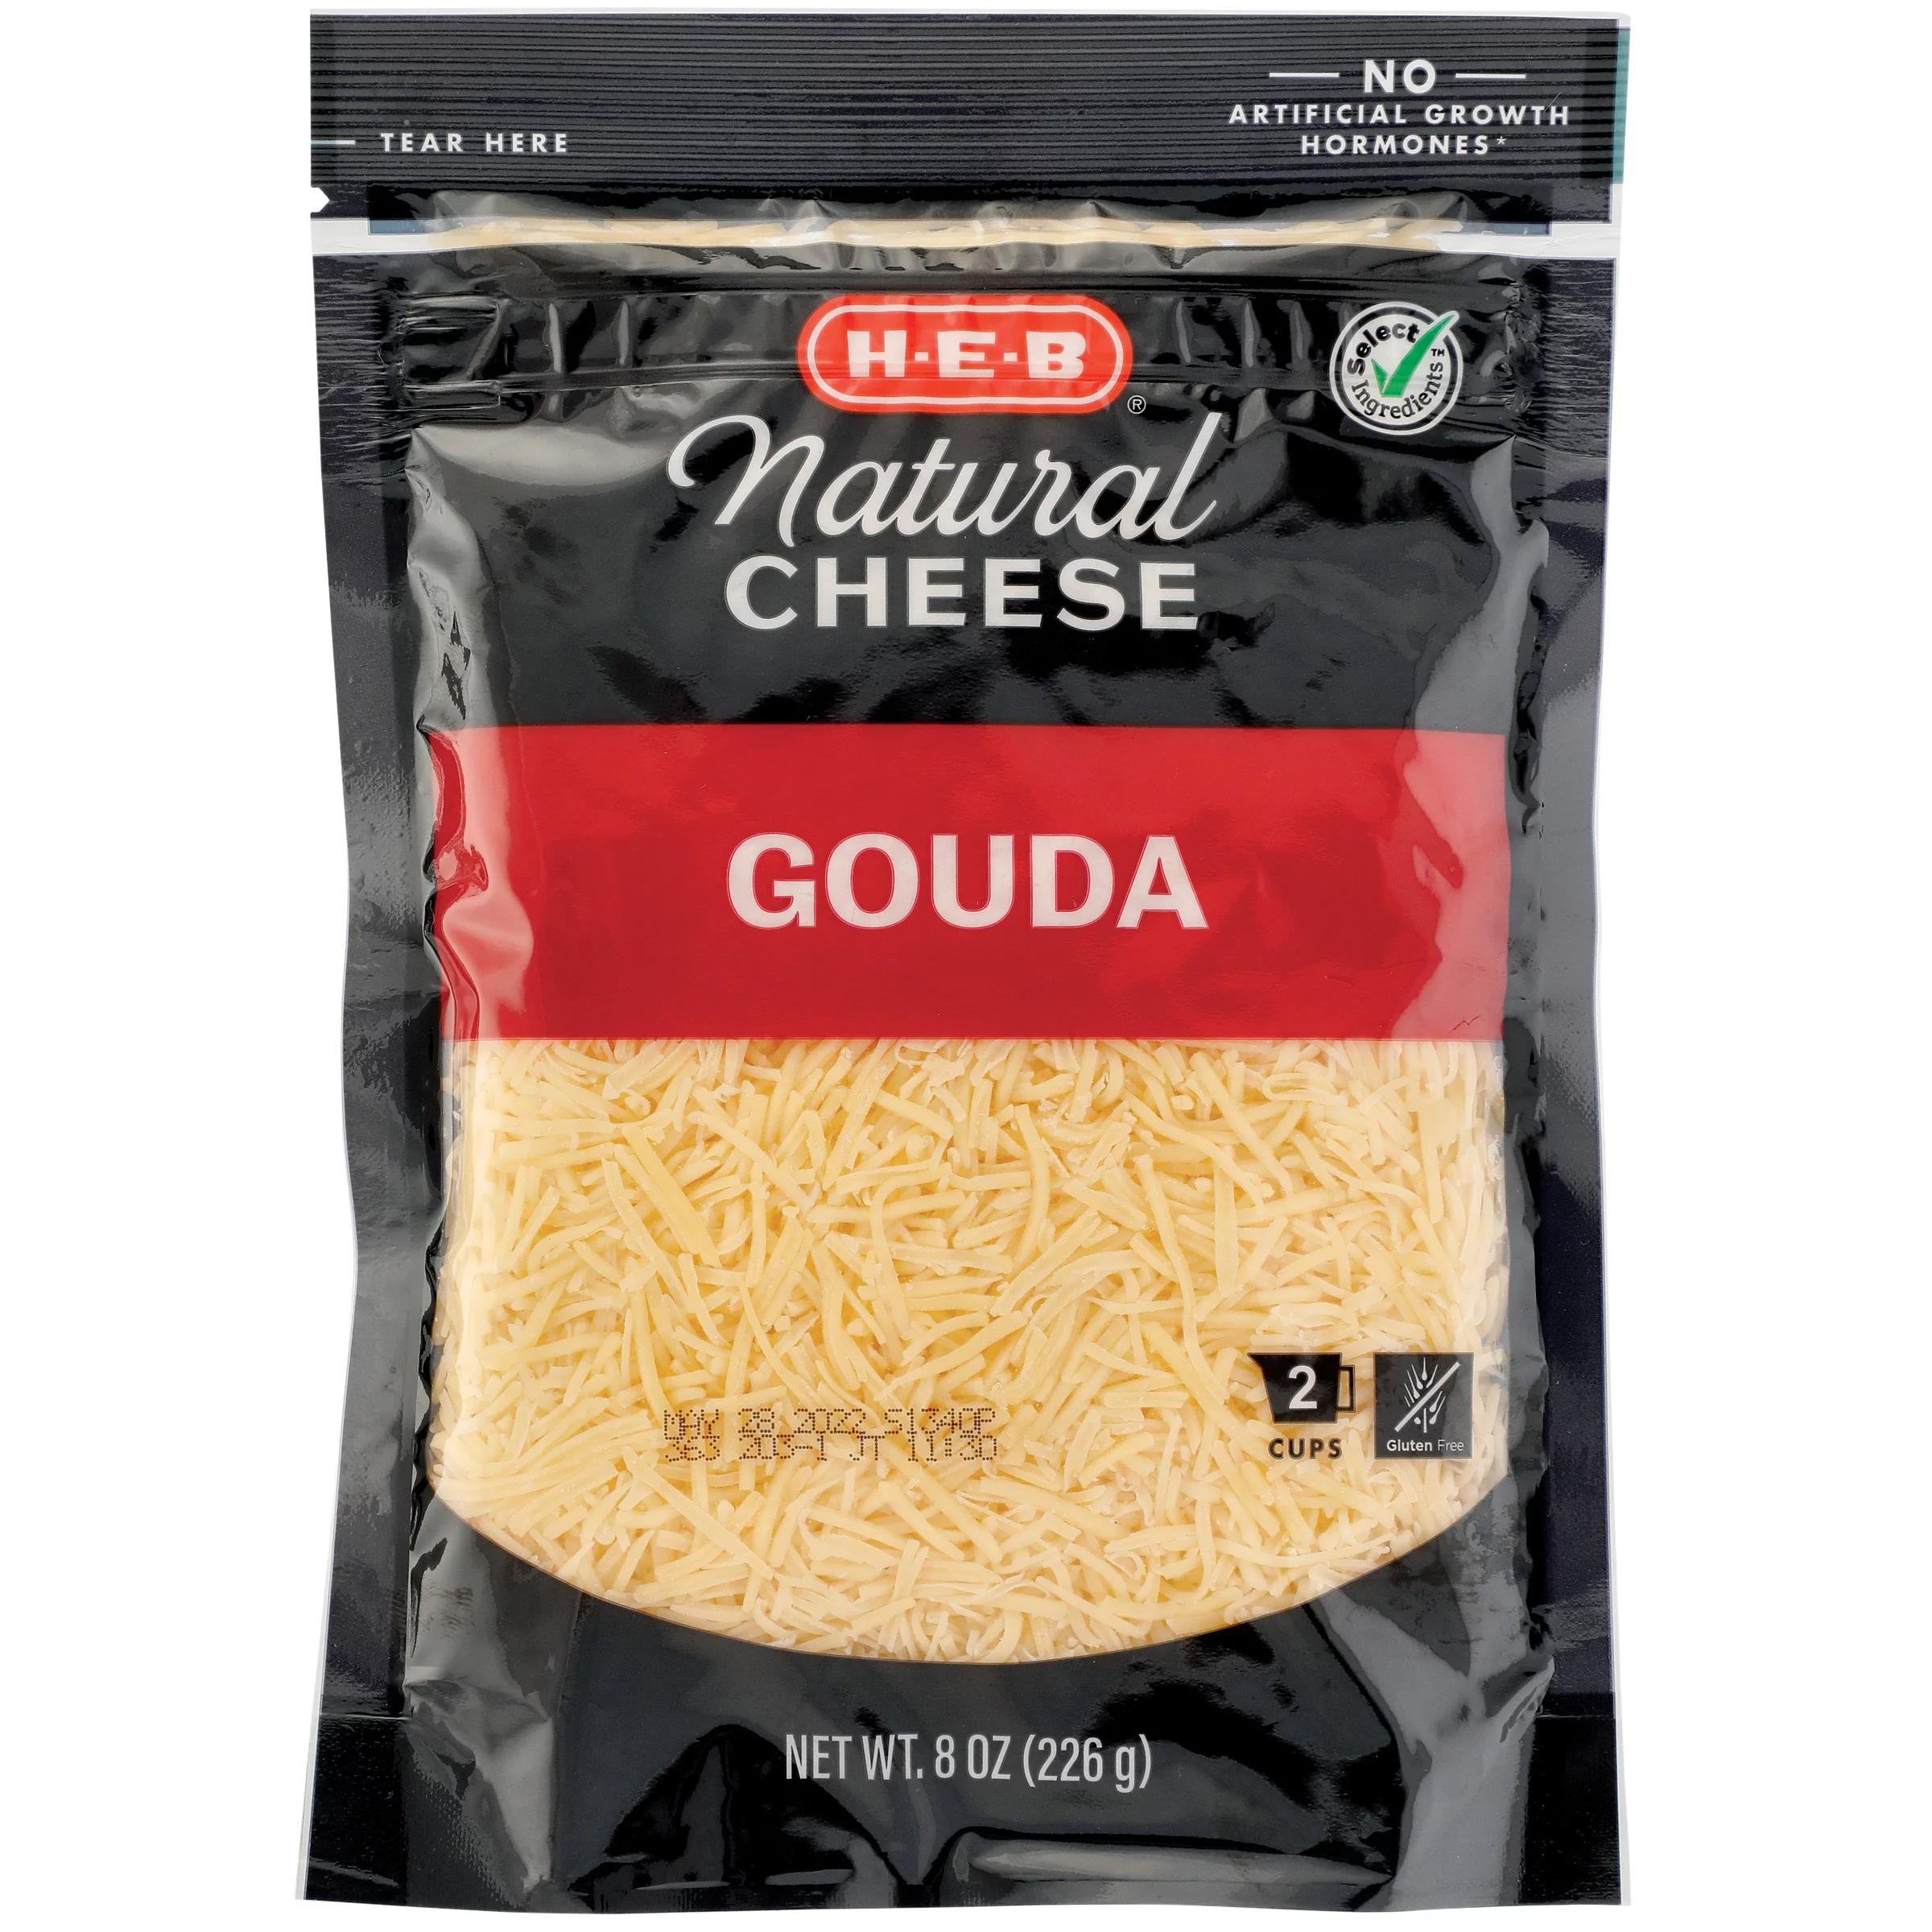 shredded smoked gouda - Can you shred smoked Gouda cheese